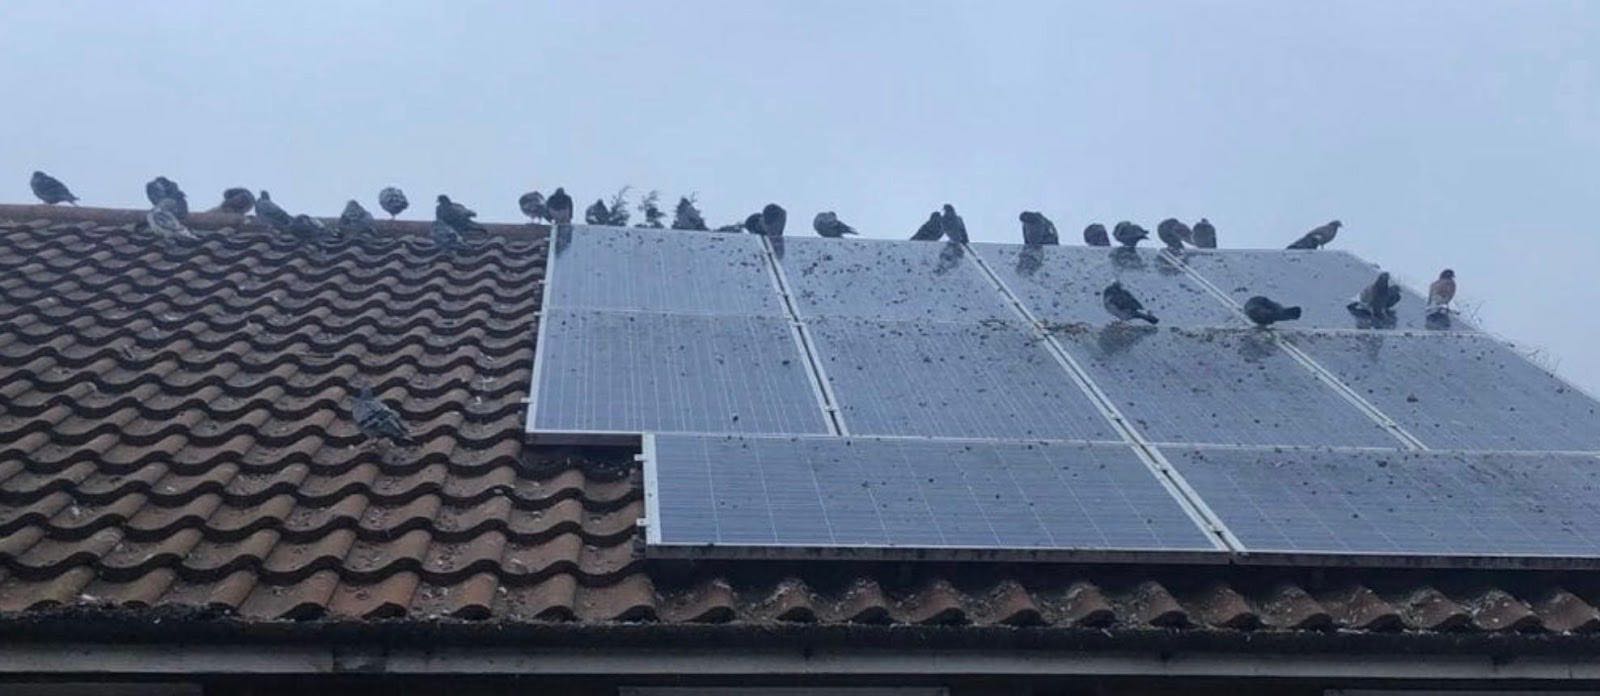 Pigeons on solar panels